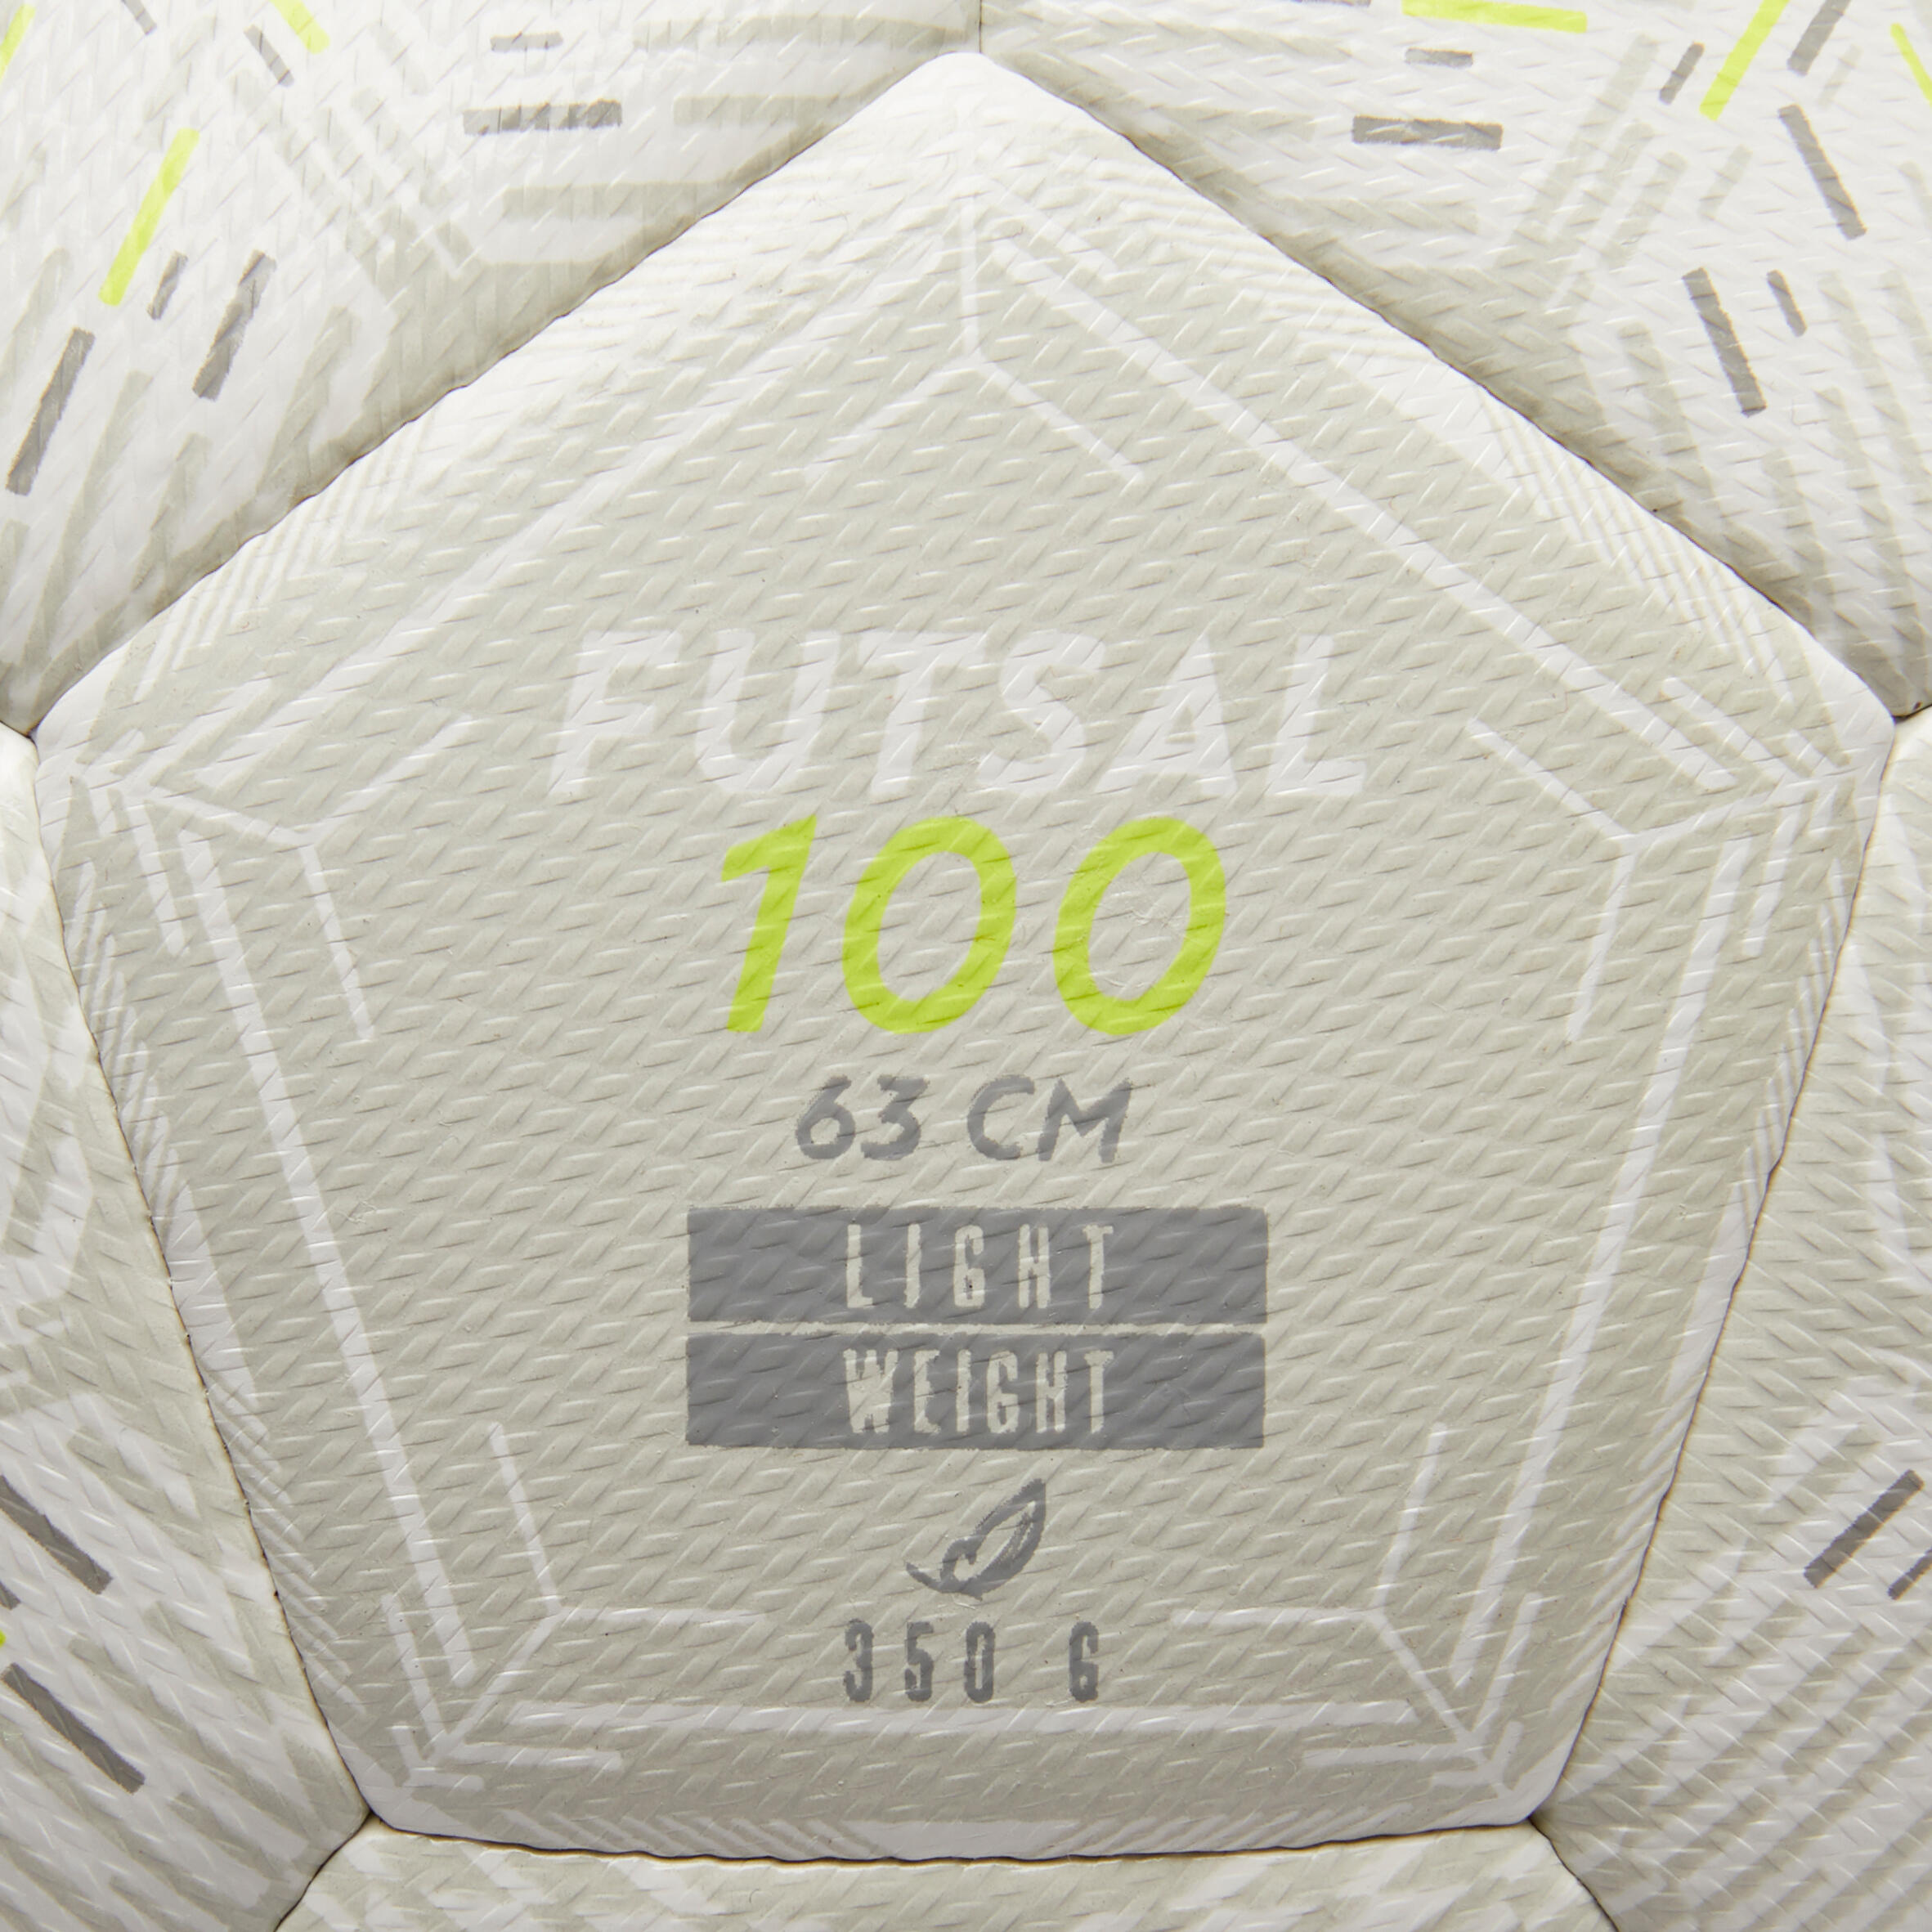 Futsal Ball 100 Light - White 2/6